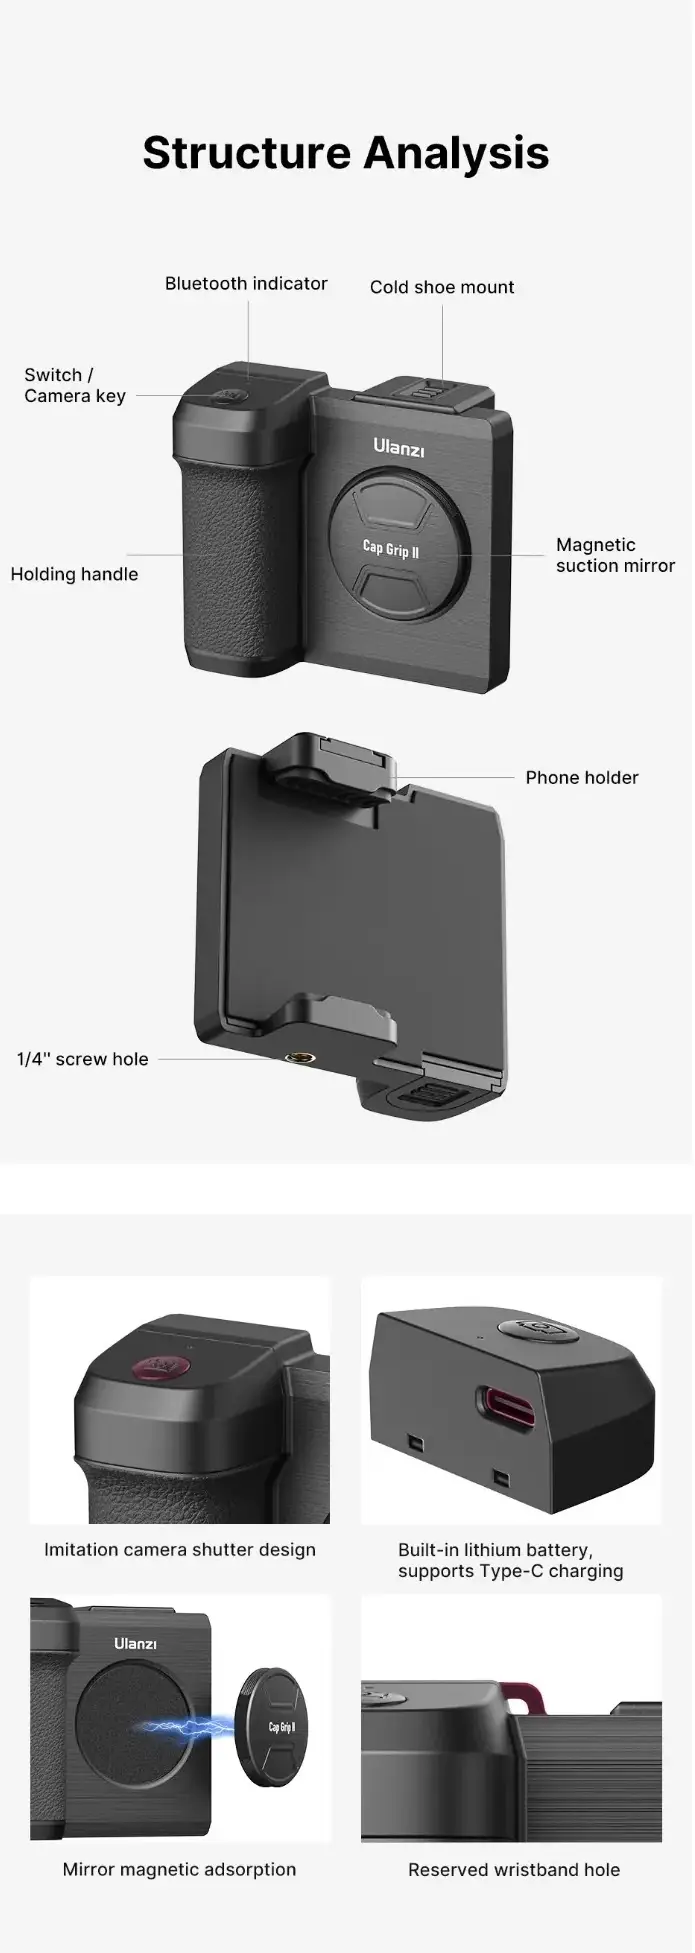 Ulanzi CG01 Bluetooth Smartphone CapGrip II-Des6